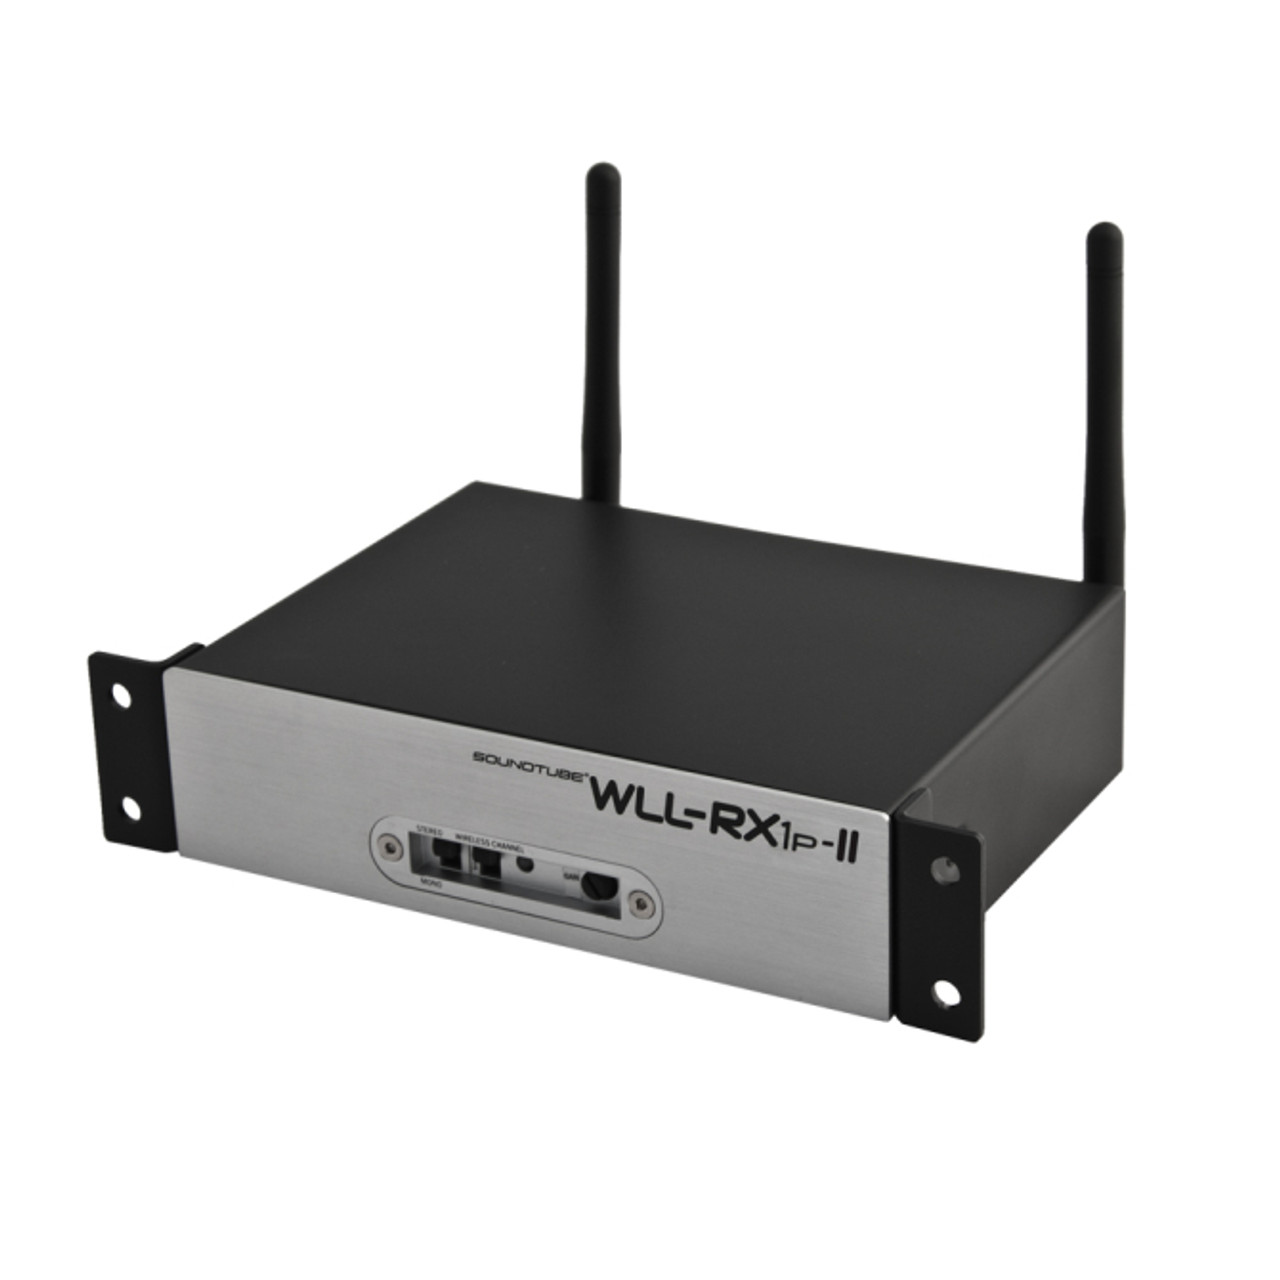 SoundTube WLL-RX1P-II Tri-band Uncompressed Wireless Receiver (WLL-RX1P-II)